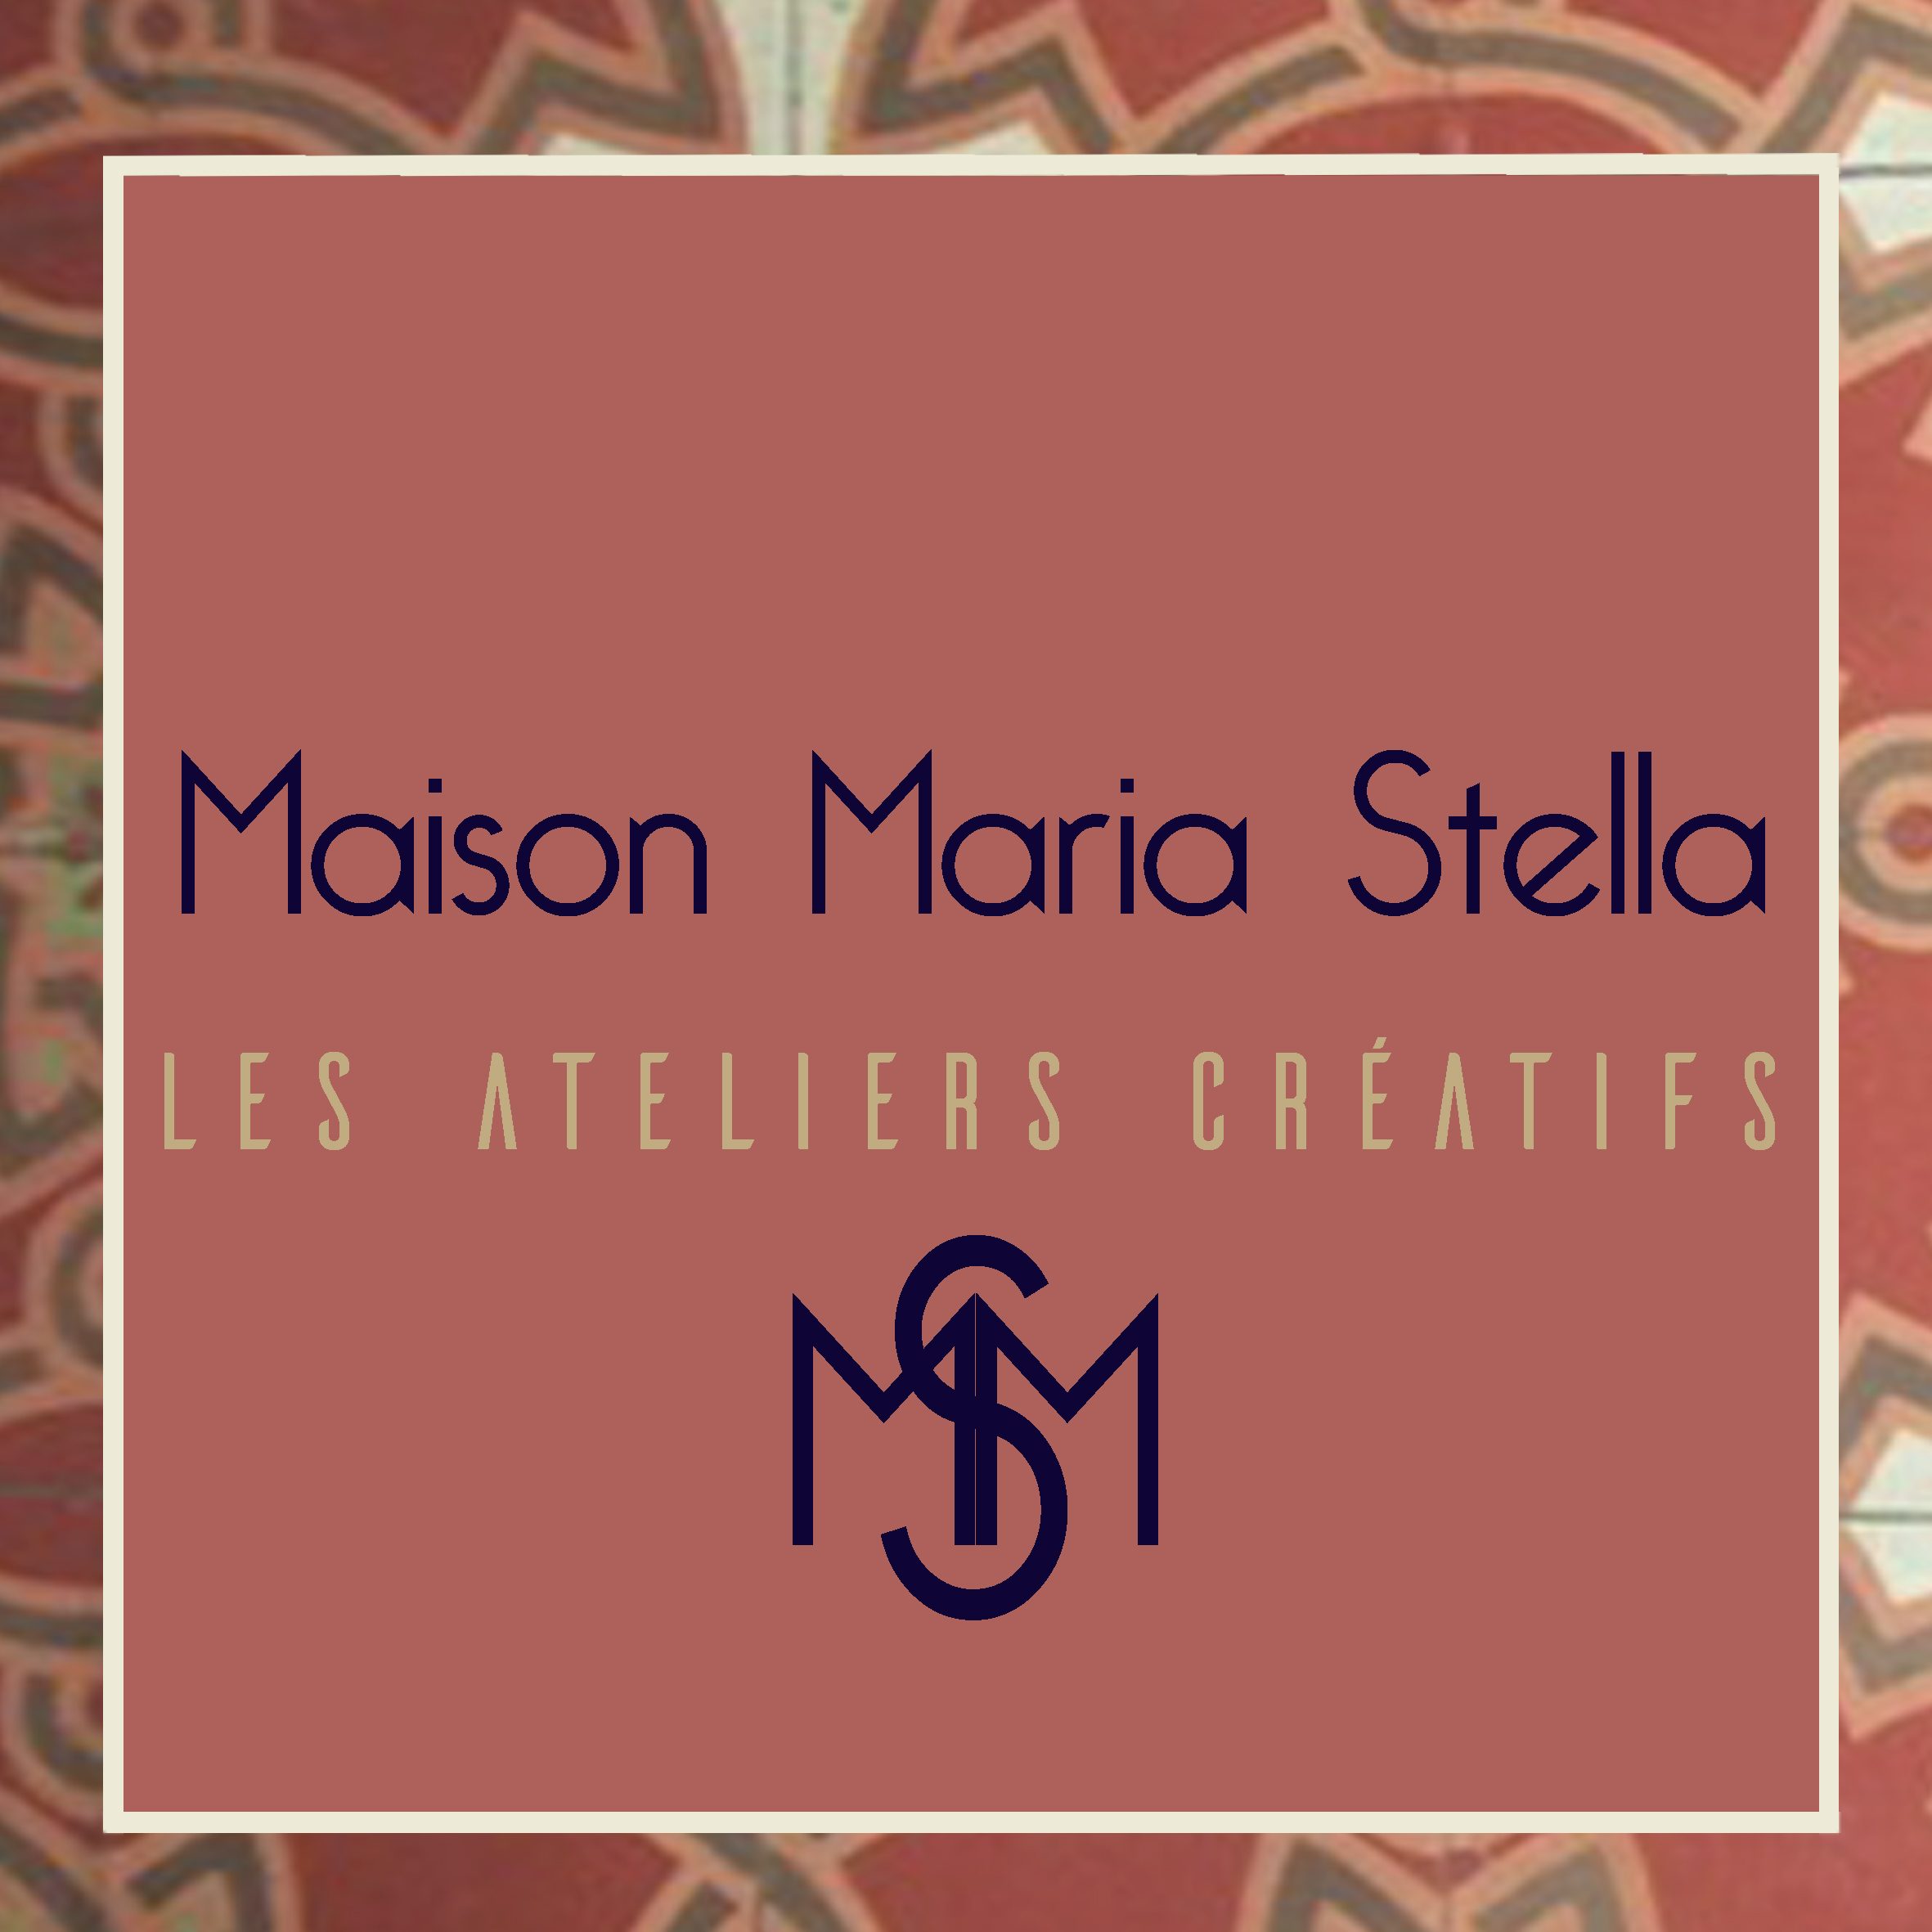 Maison Maria Stella logo